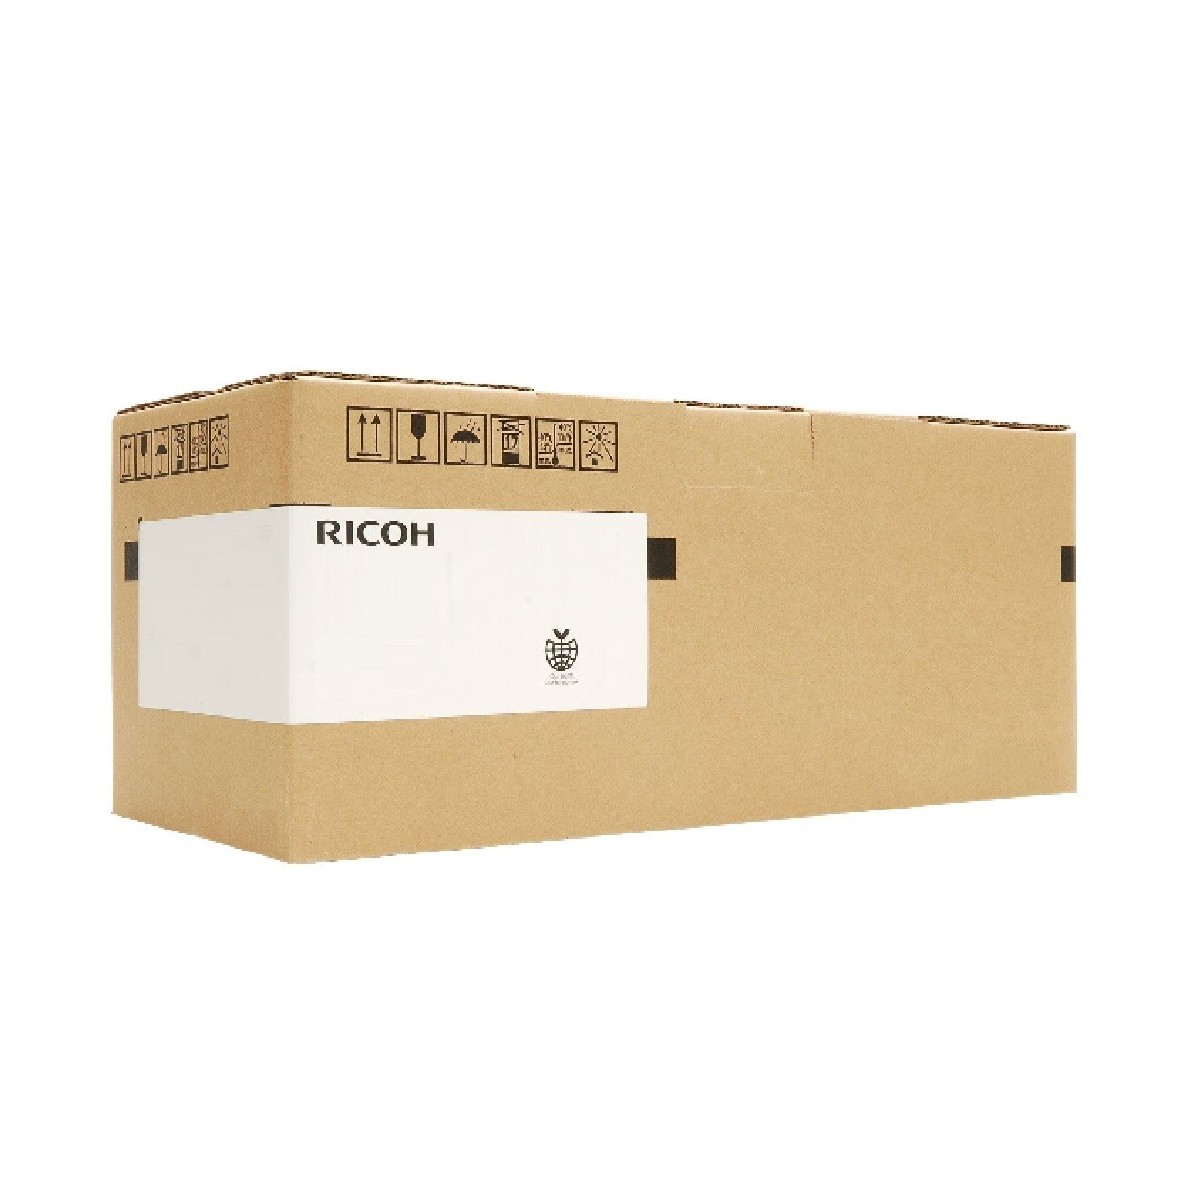 Ricoh B205K060 - Maintenance kit - 120000 pages - Ricoh - Aficio 2027 Aficio 2027SP Aficio 2032 Aficio 3025 - 1 pc(s)